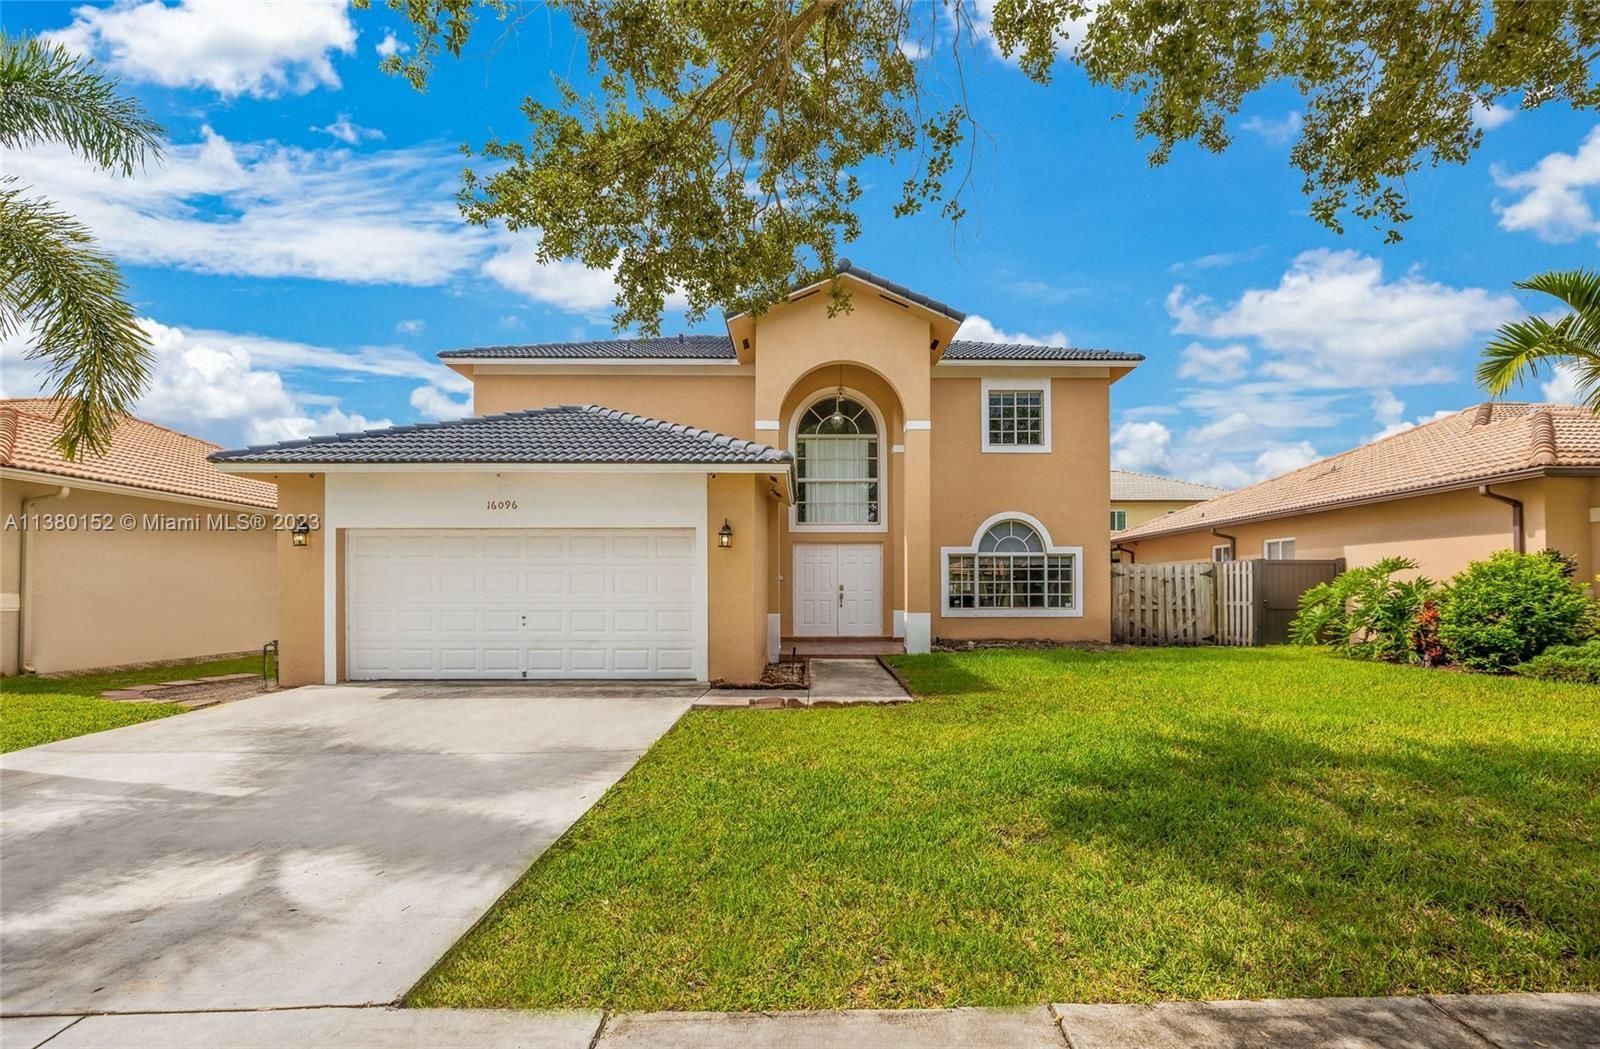 Real estate property located at 16096 149th Ter, Miami-Dade County, Miami, FL